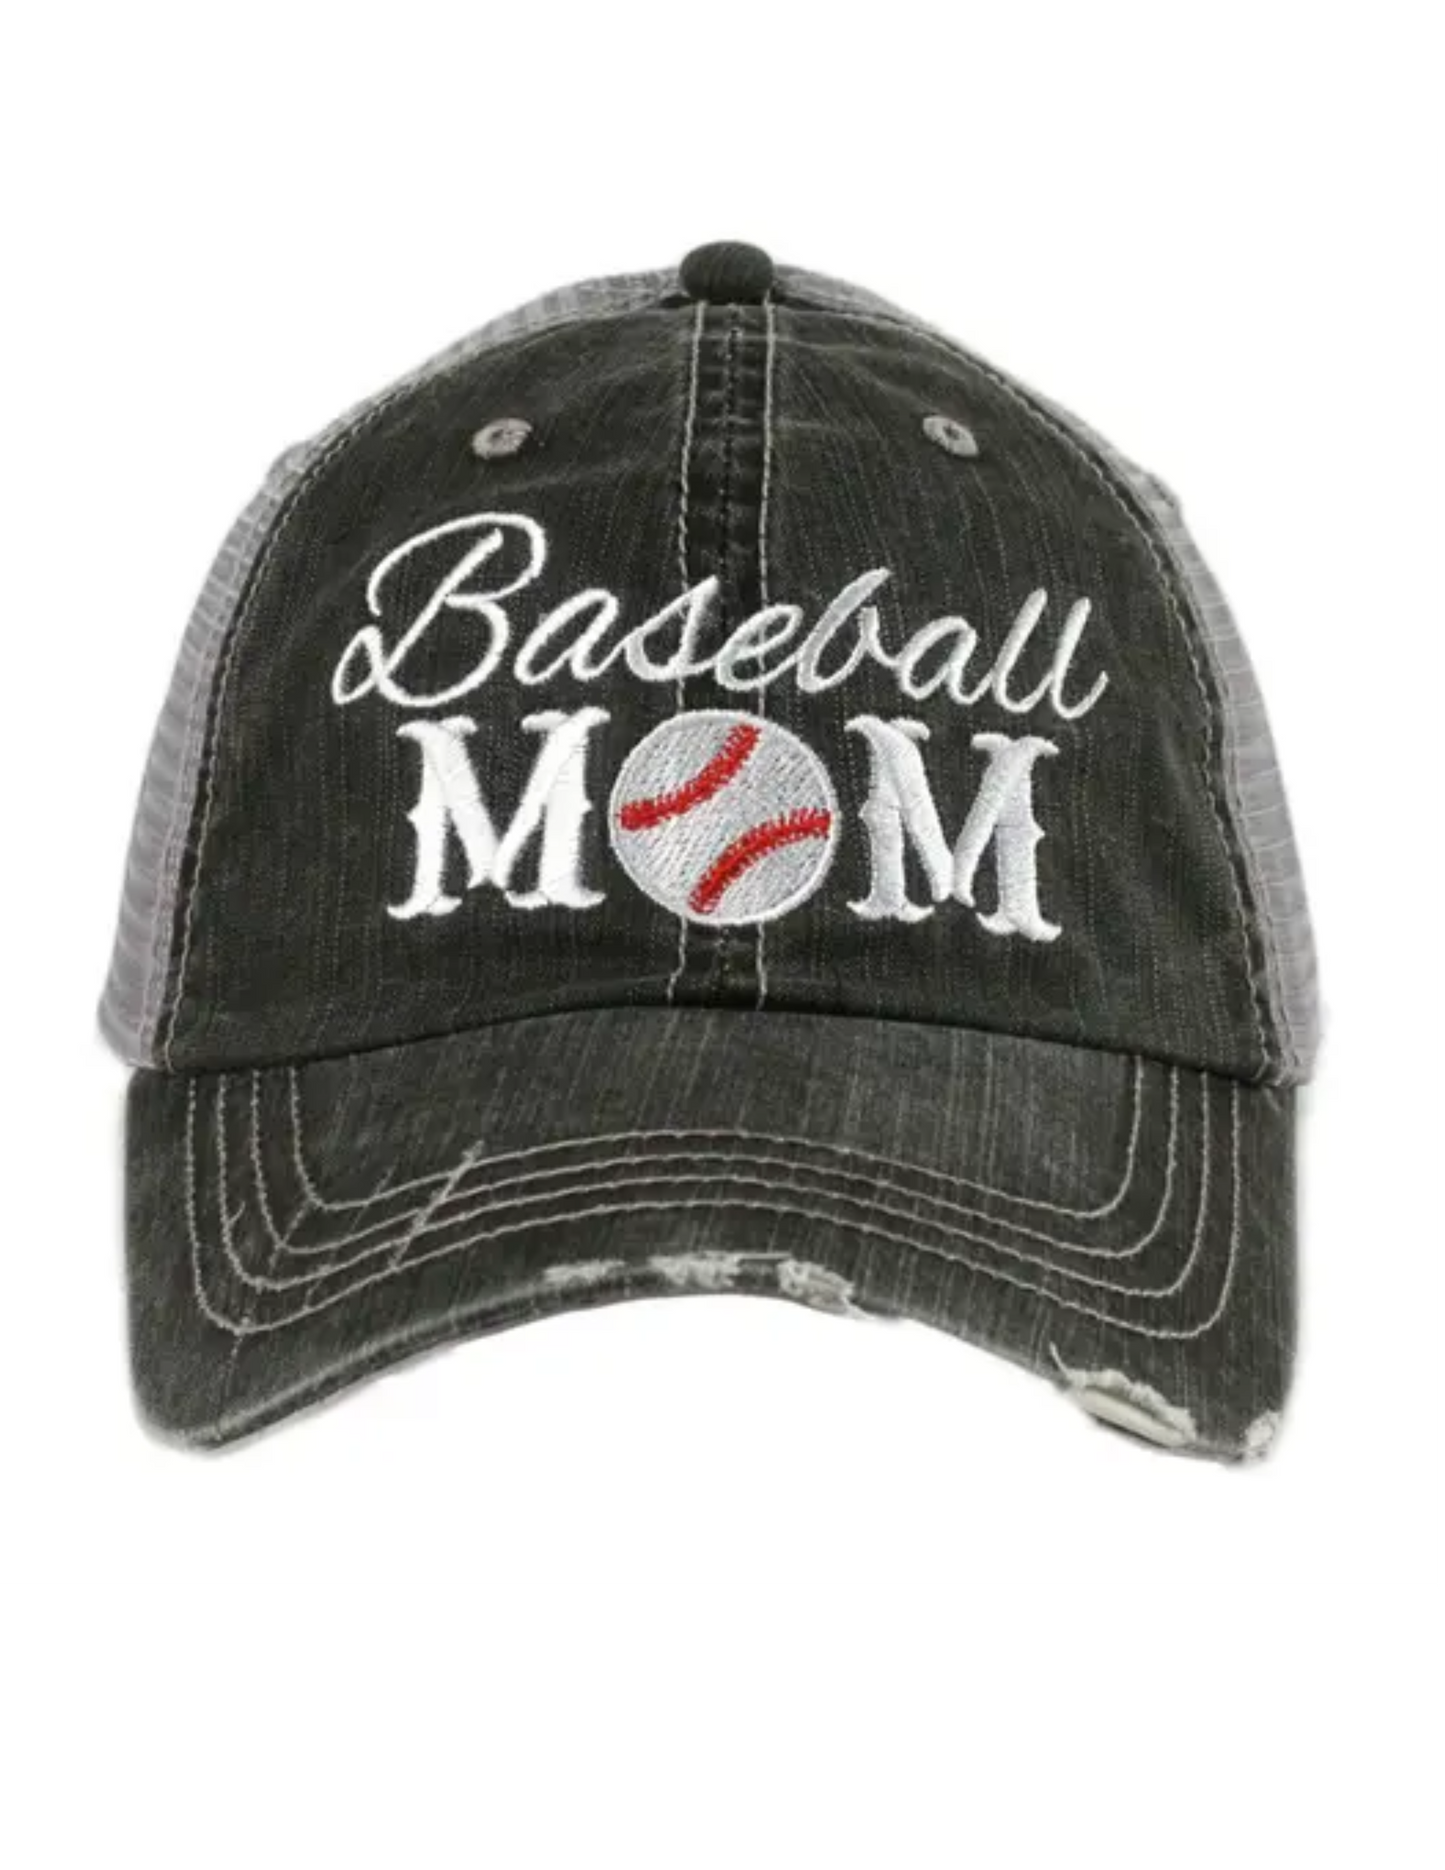 Baseball Mom Trucker Style Cap